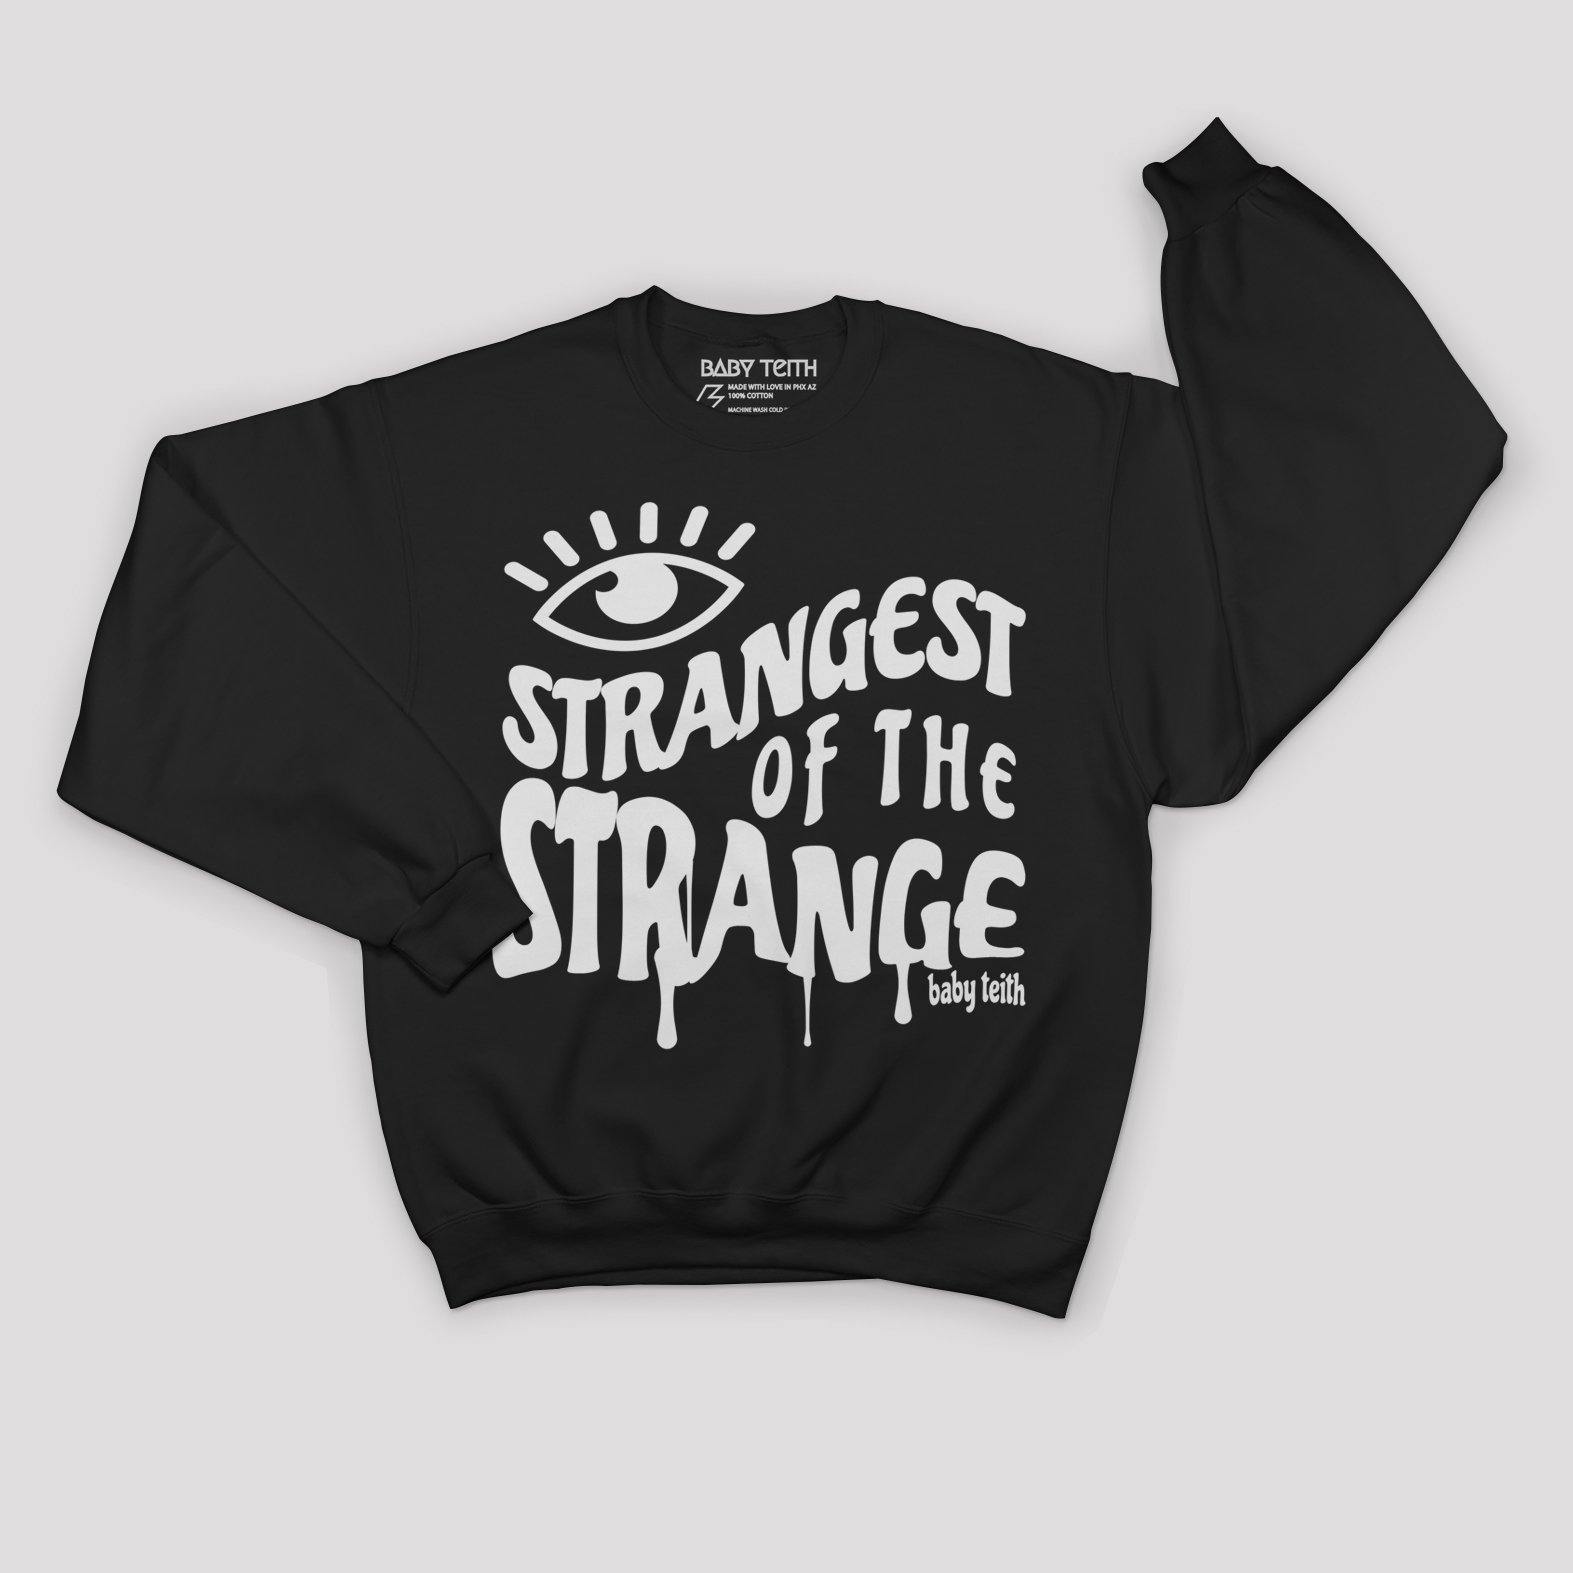 &quot;Strangest of the Strange&quot; Sweatshirt for Kids - Baby Teith